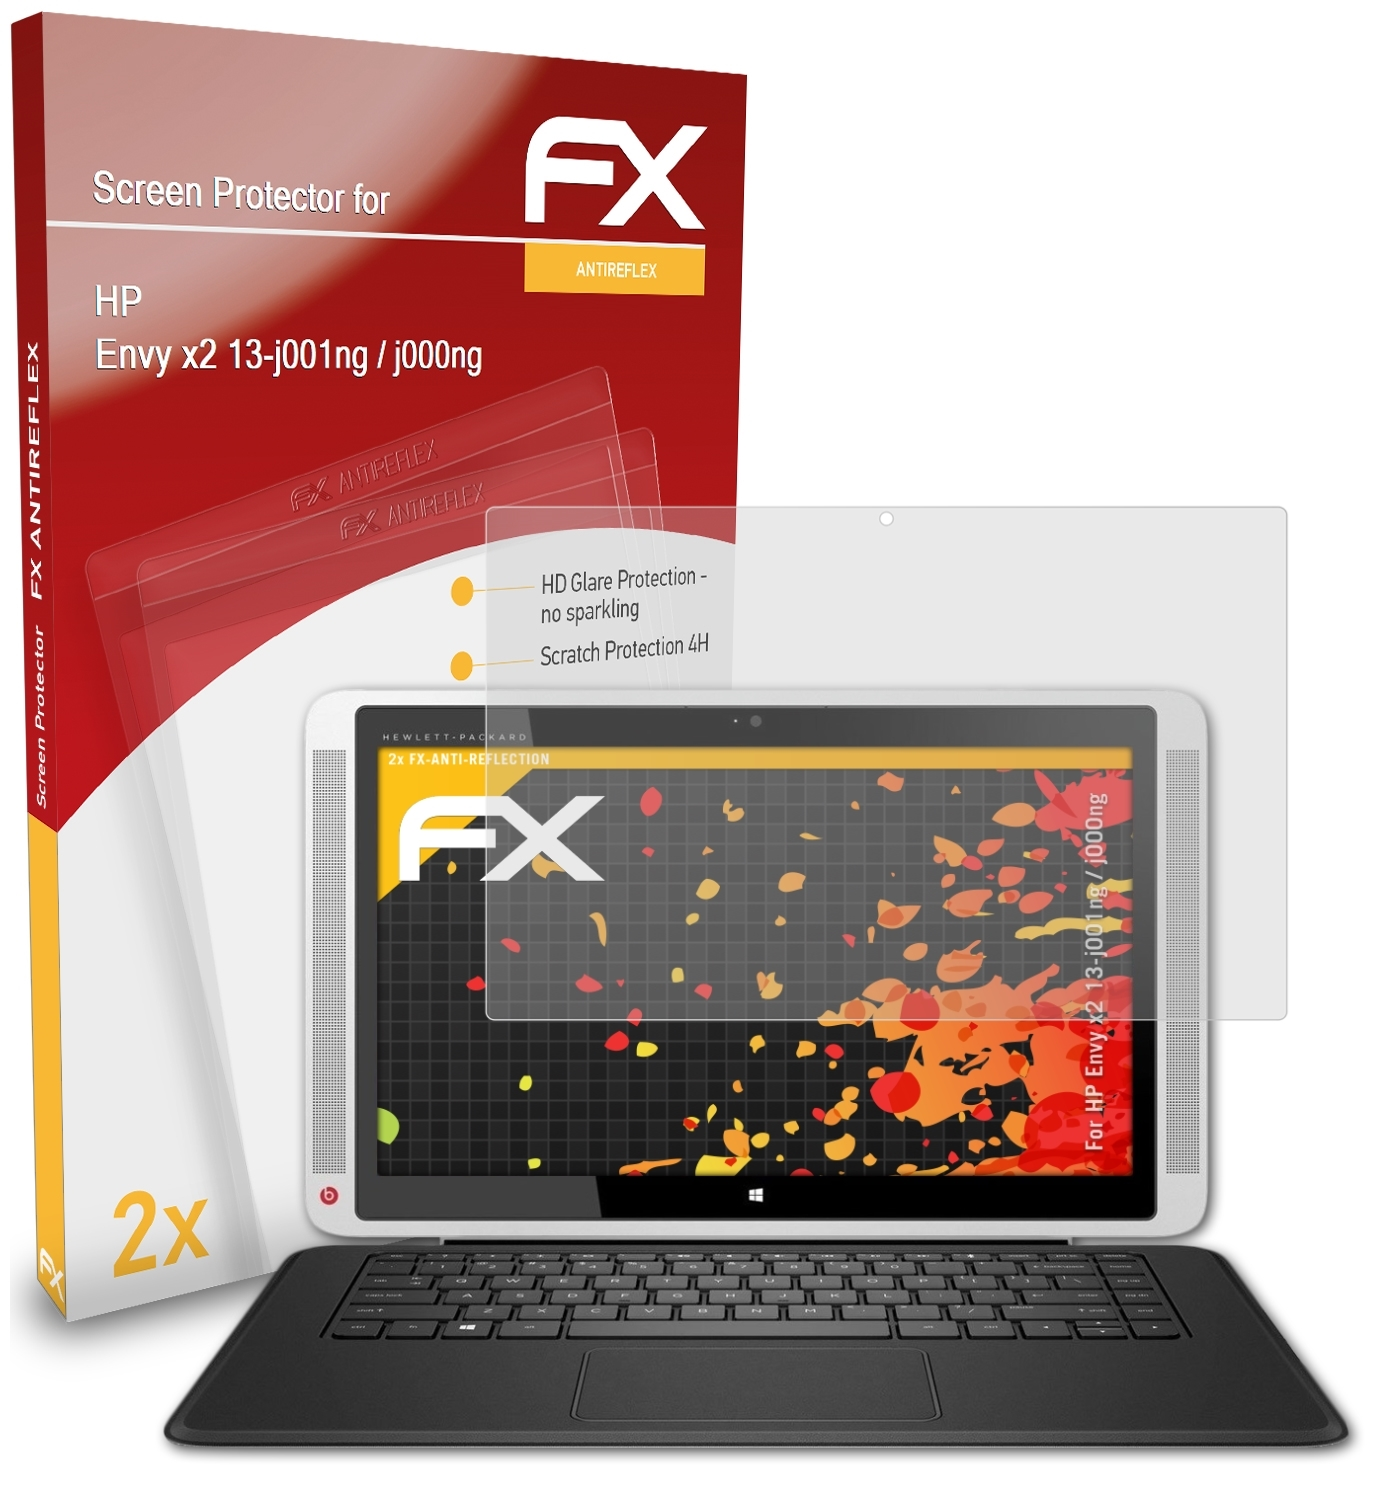 ATFOLIX 2x FX-Antireflex j000ng) / HP Displayschutz(für x2 Envy 13-j001ng